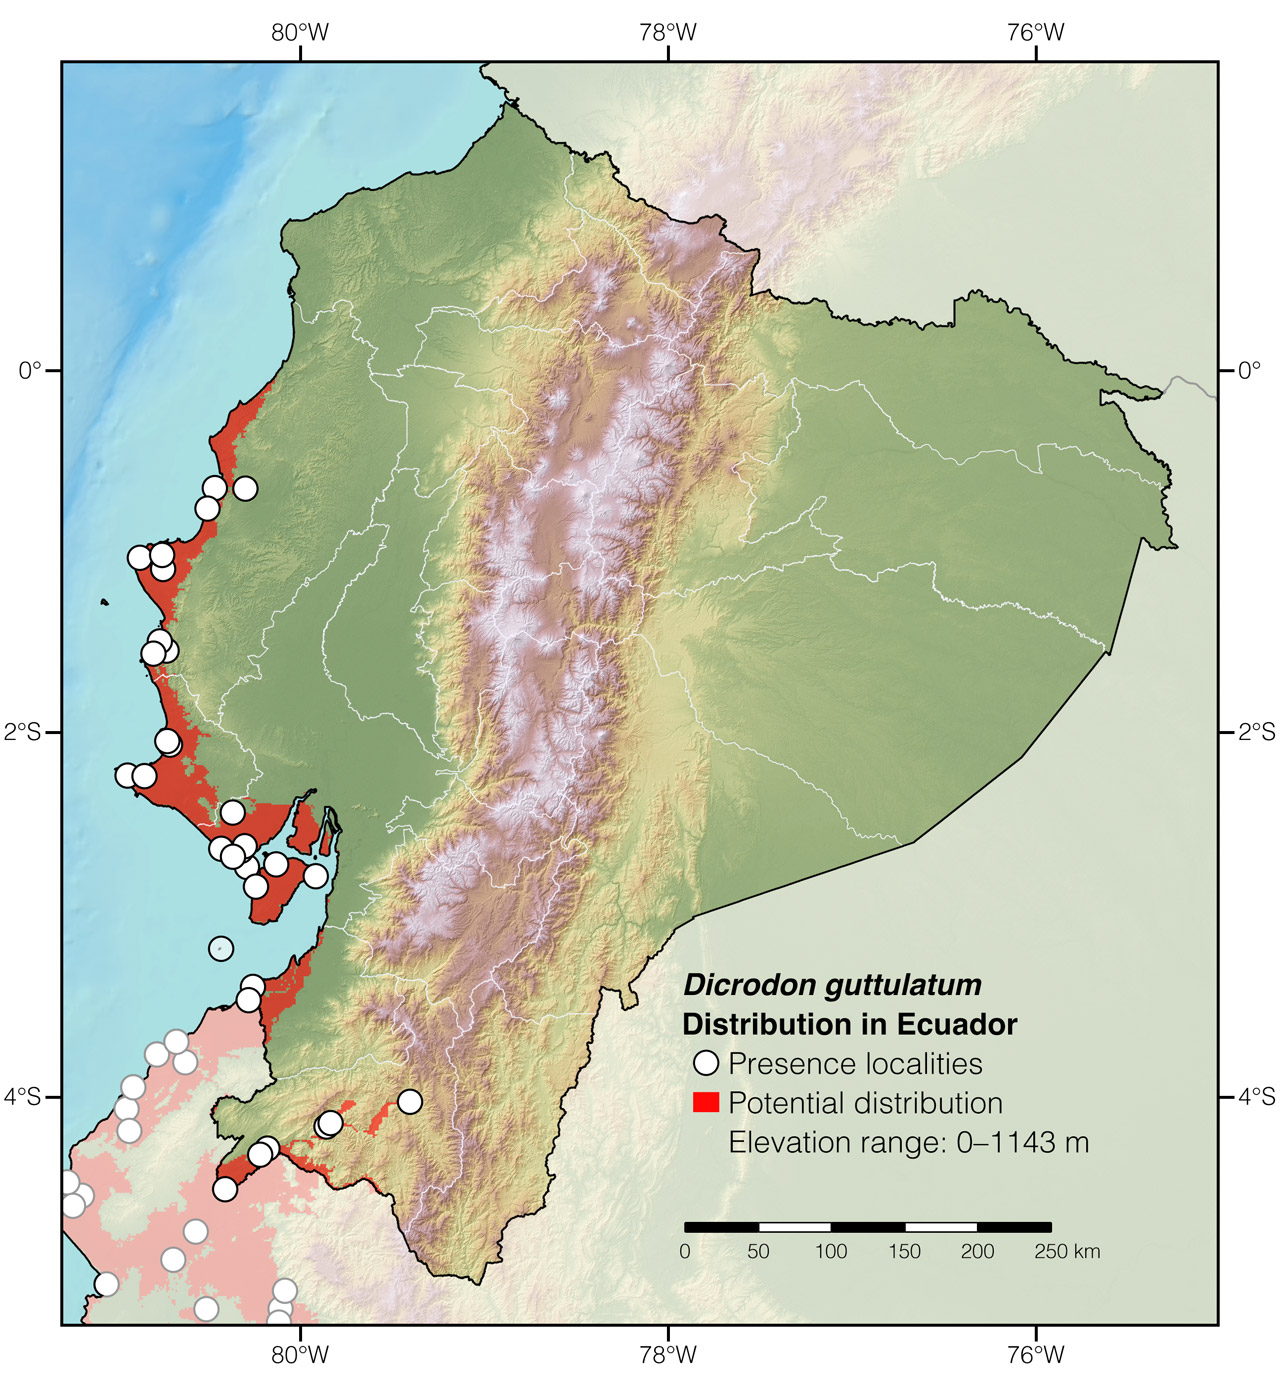 Distribution of Dicrodon guttulatum in Ecuador